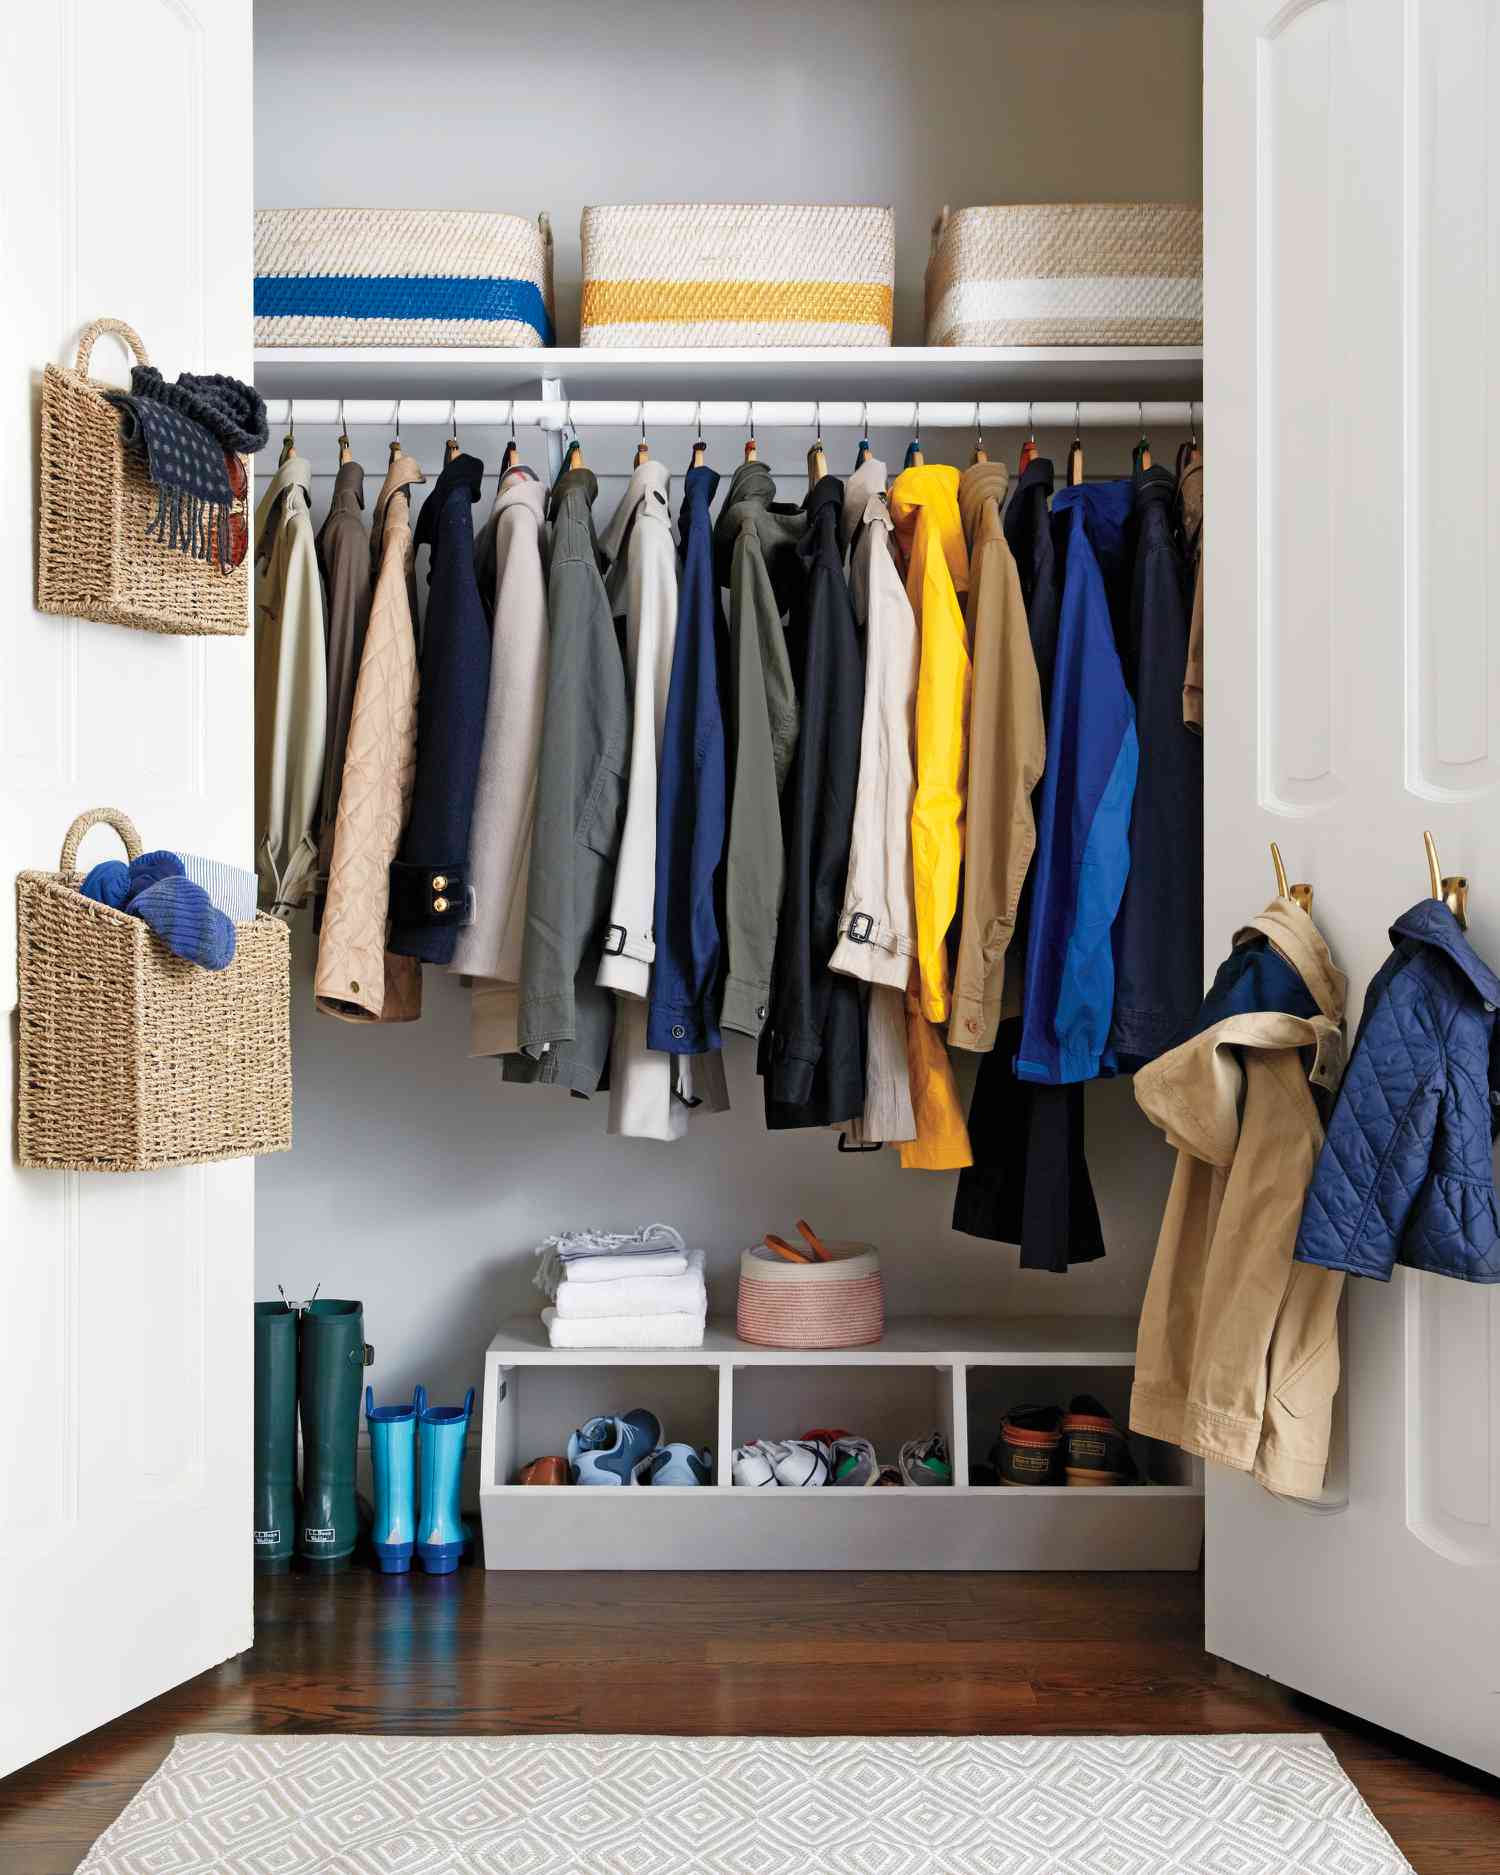 How To Organize A Deep Closet Martha, Deep Shelving Ideas